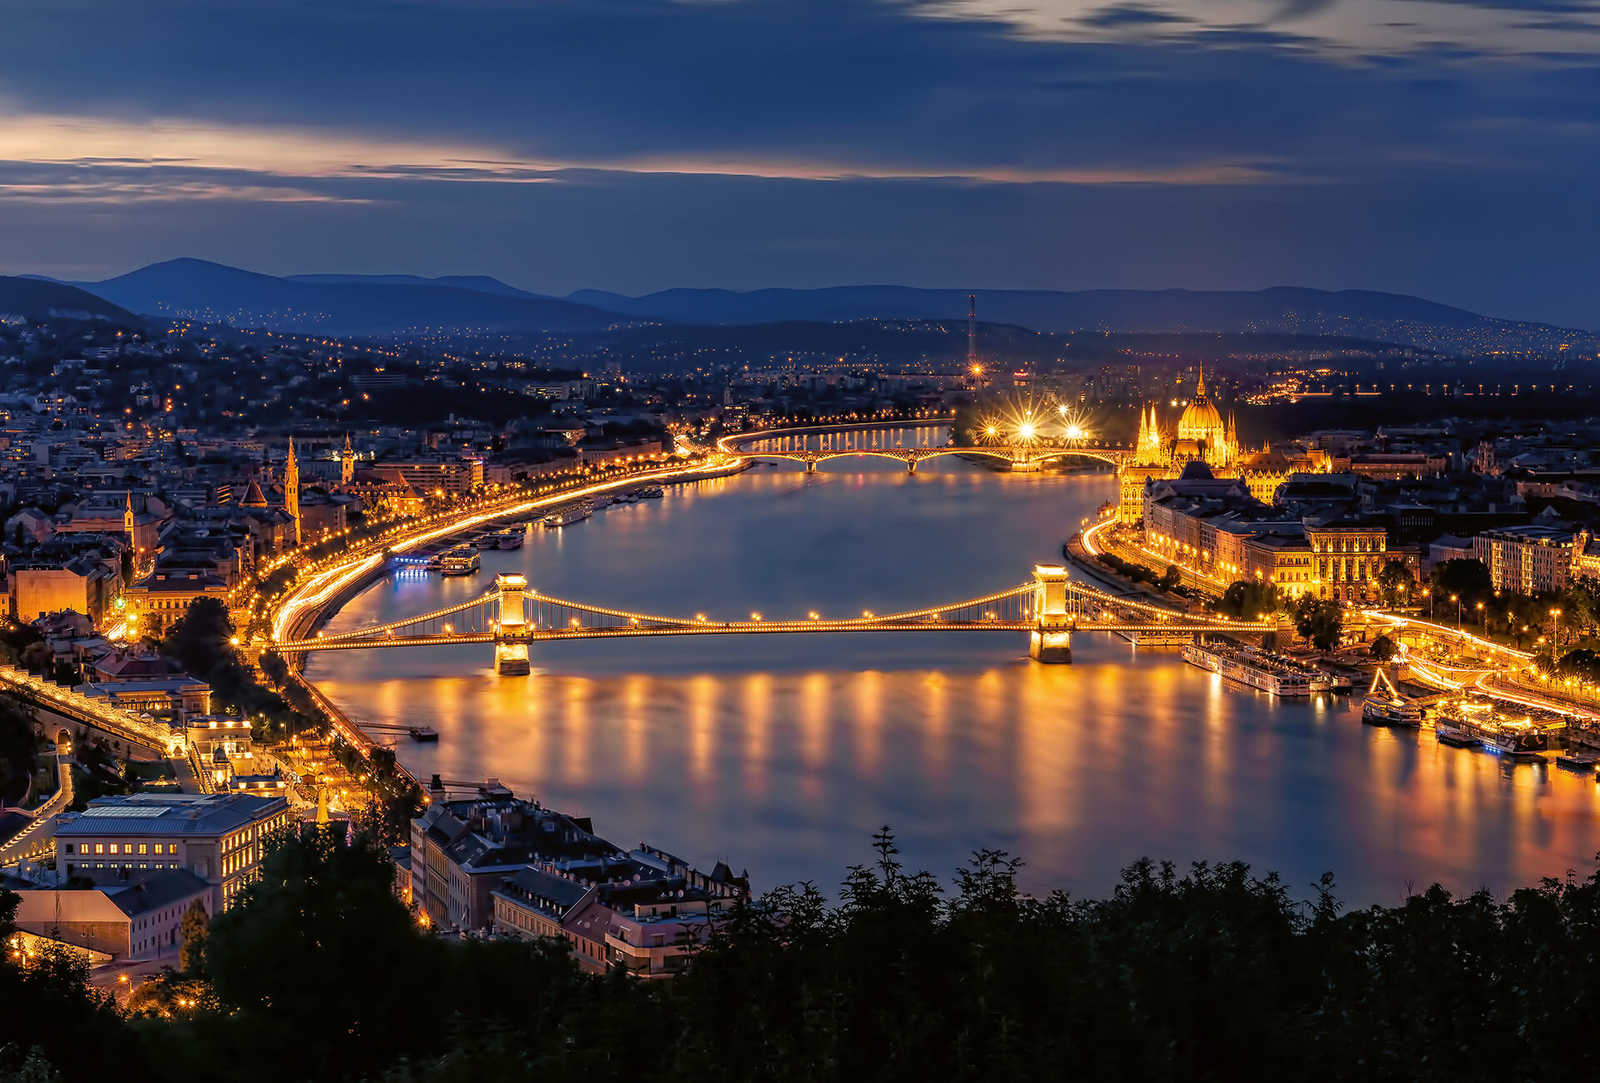         Photo wallpaper Budapest city at night - yellow, blue, white
    